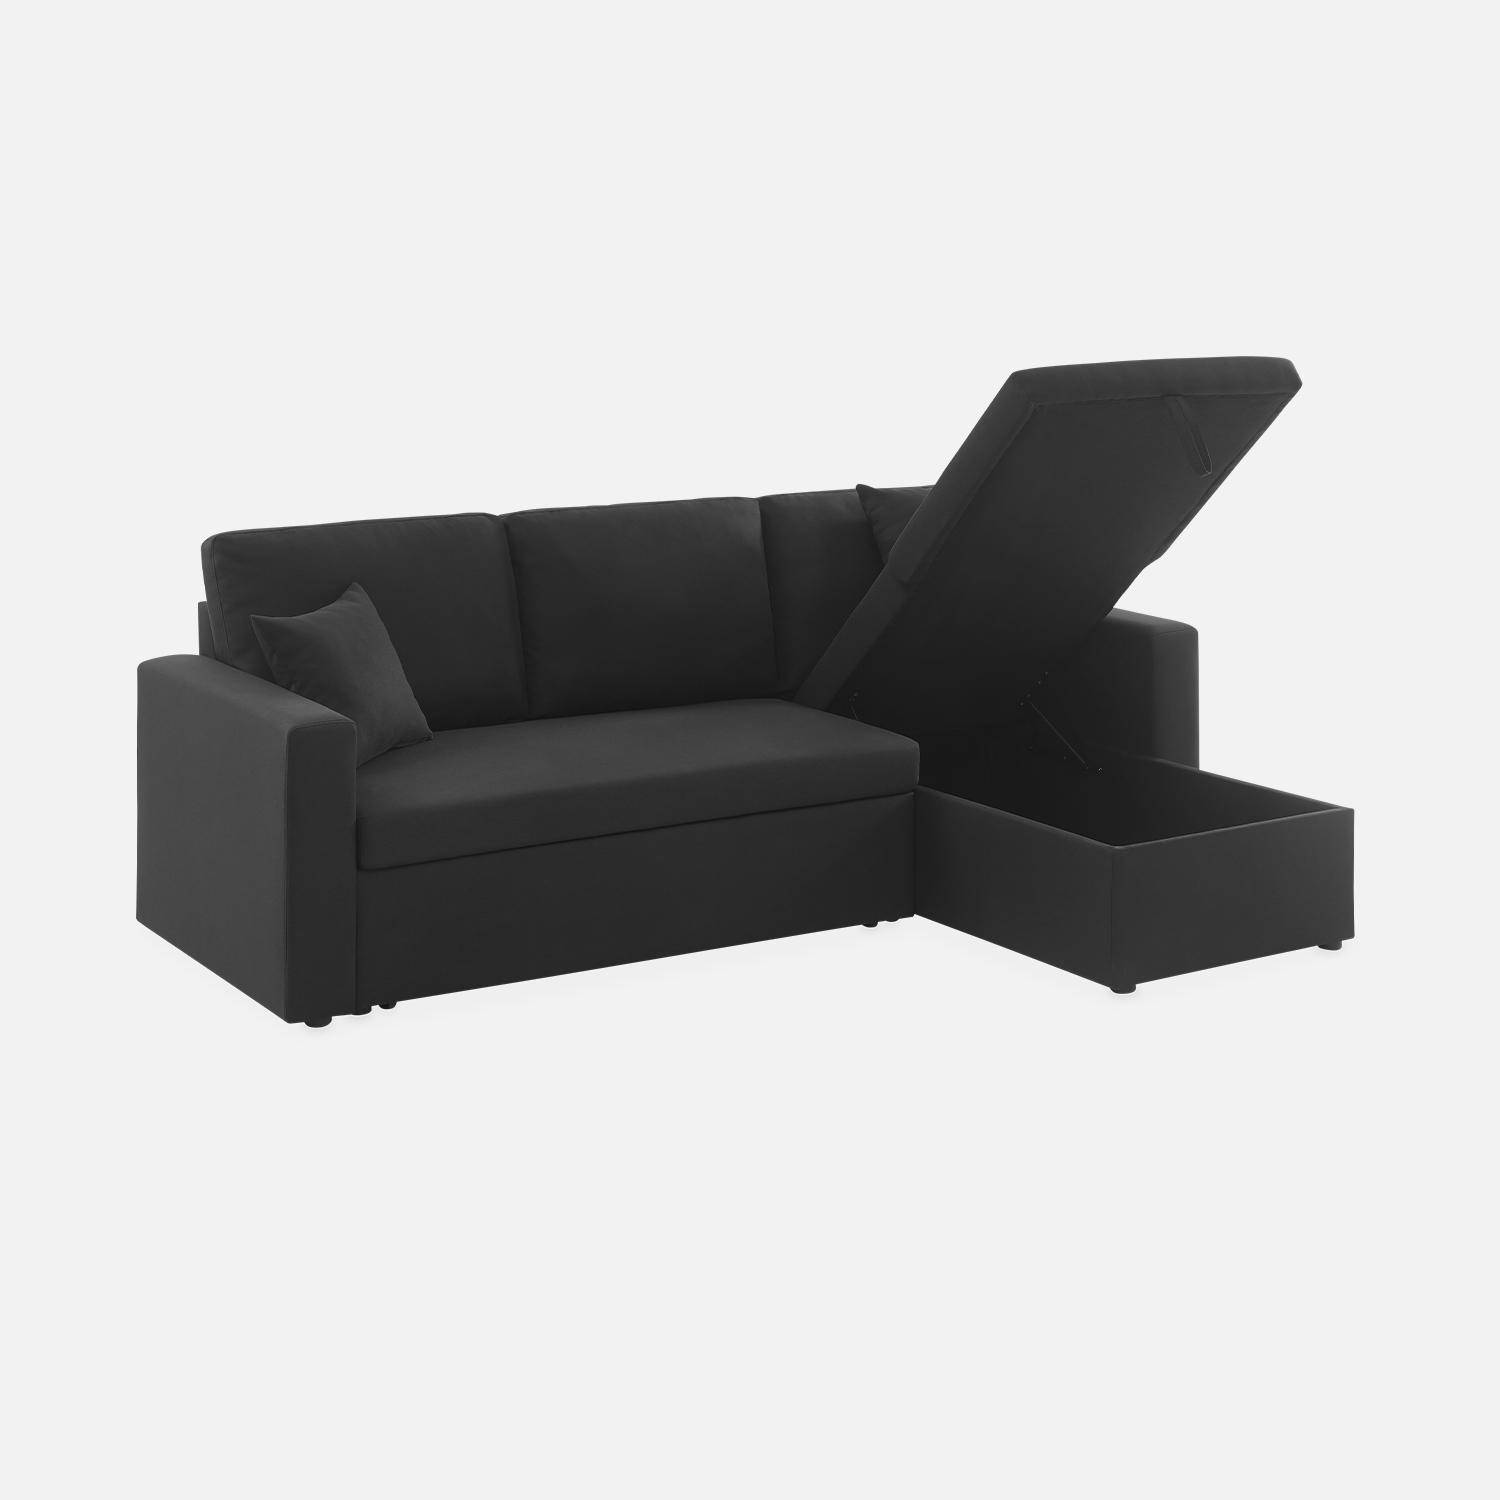 3-seater reversible black corner sofa bed with storage box, black L219xD81xH68cm, IDA,sweeek,Photo8